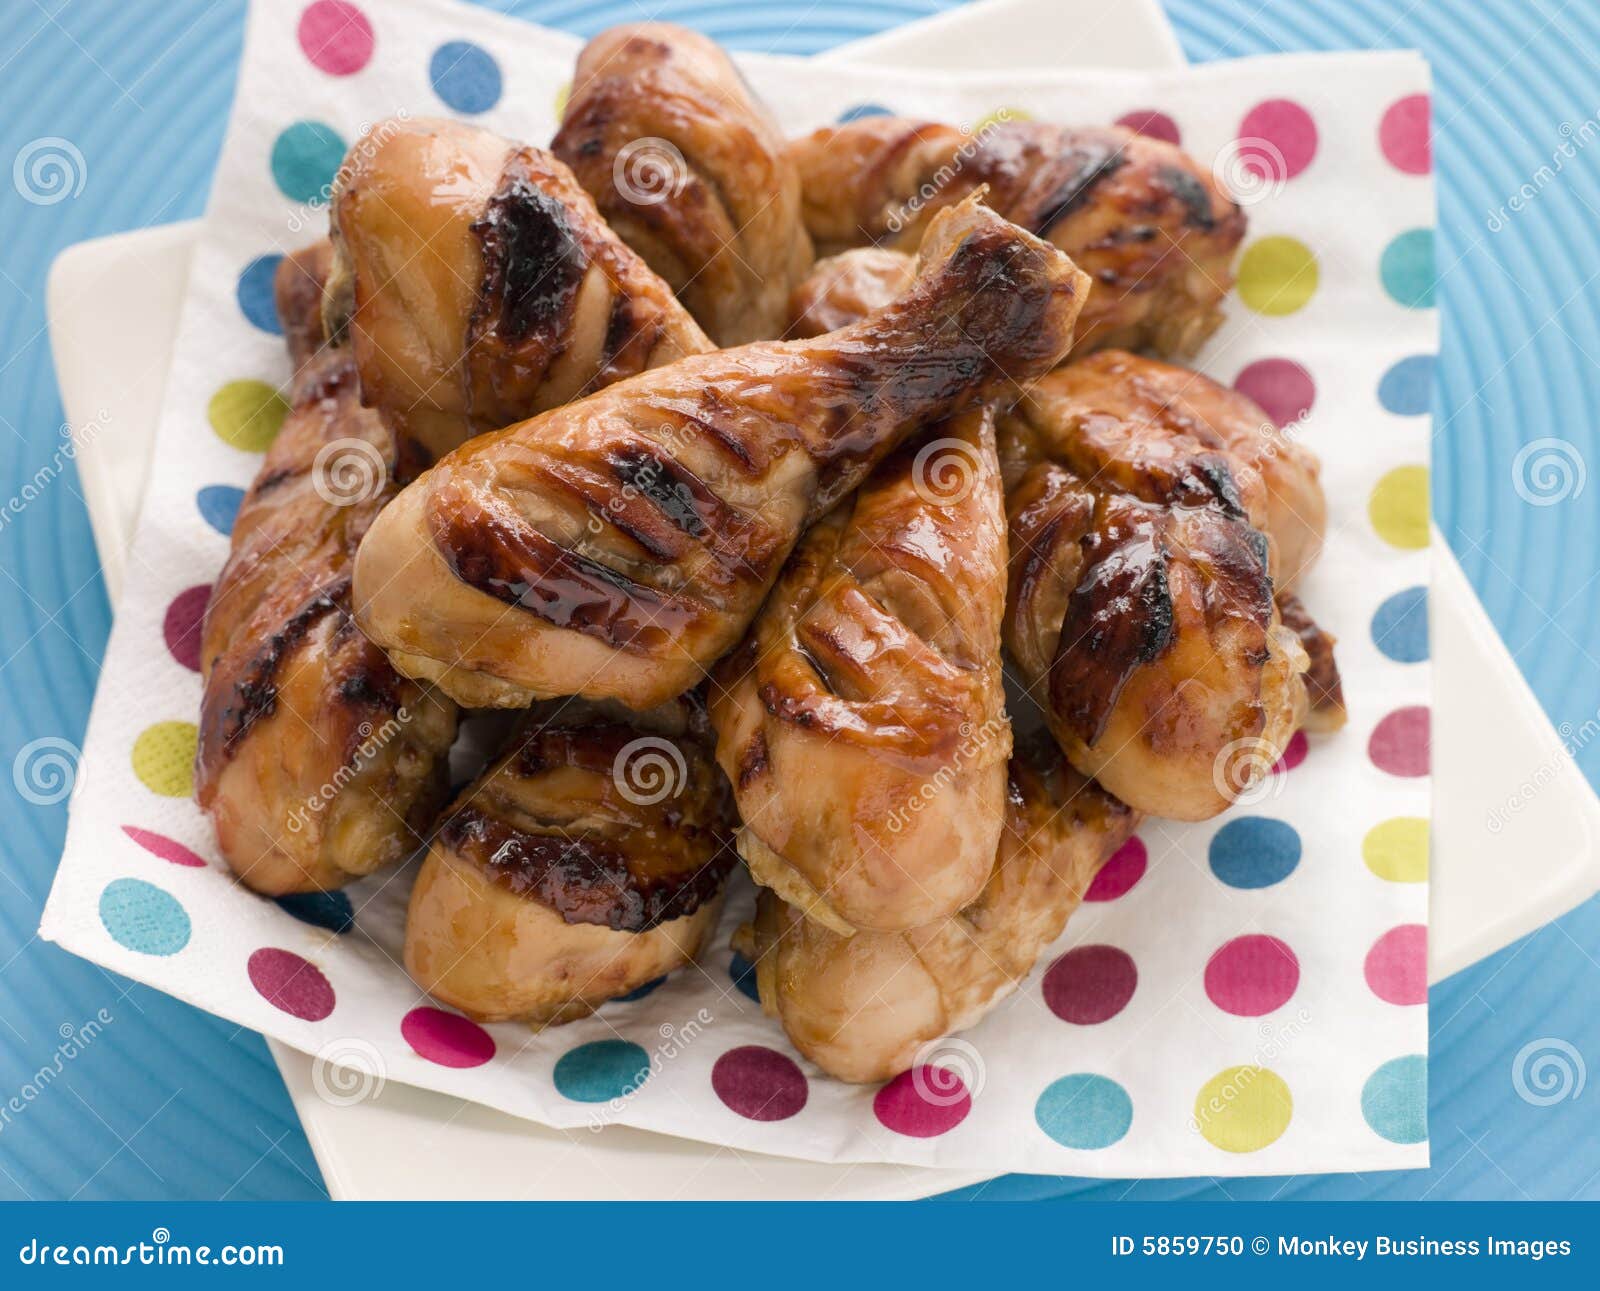 barbeque and honey glazed chicken drumsticks